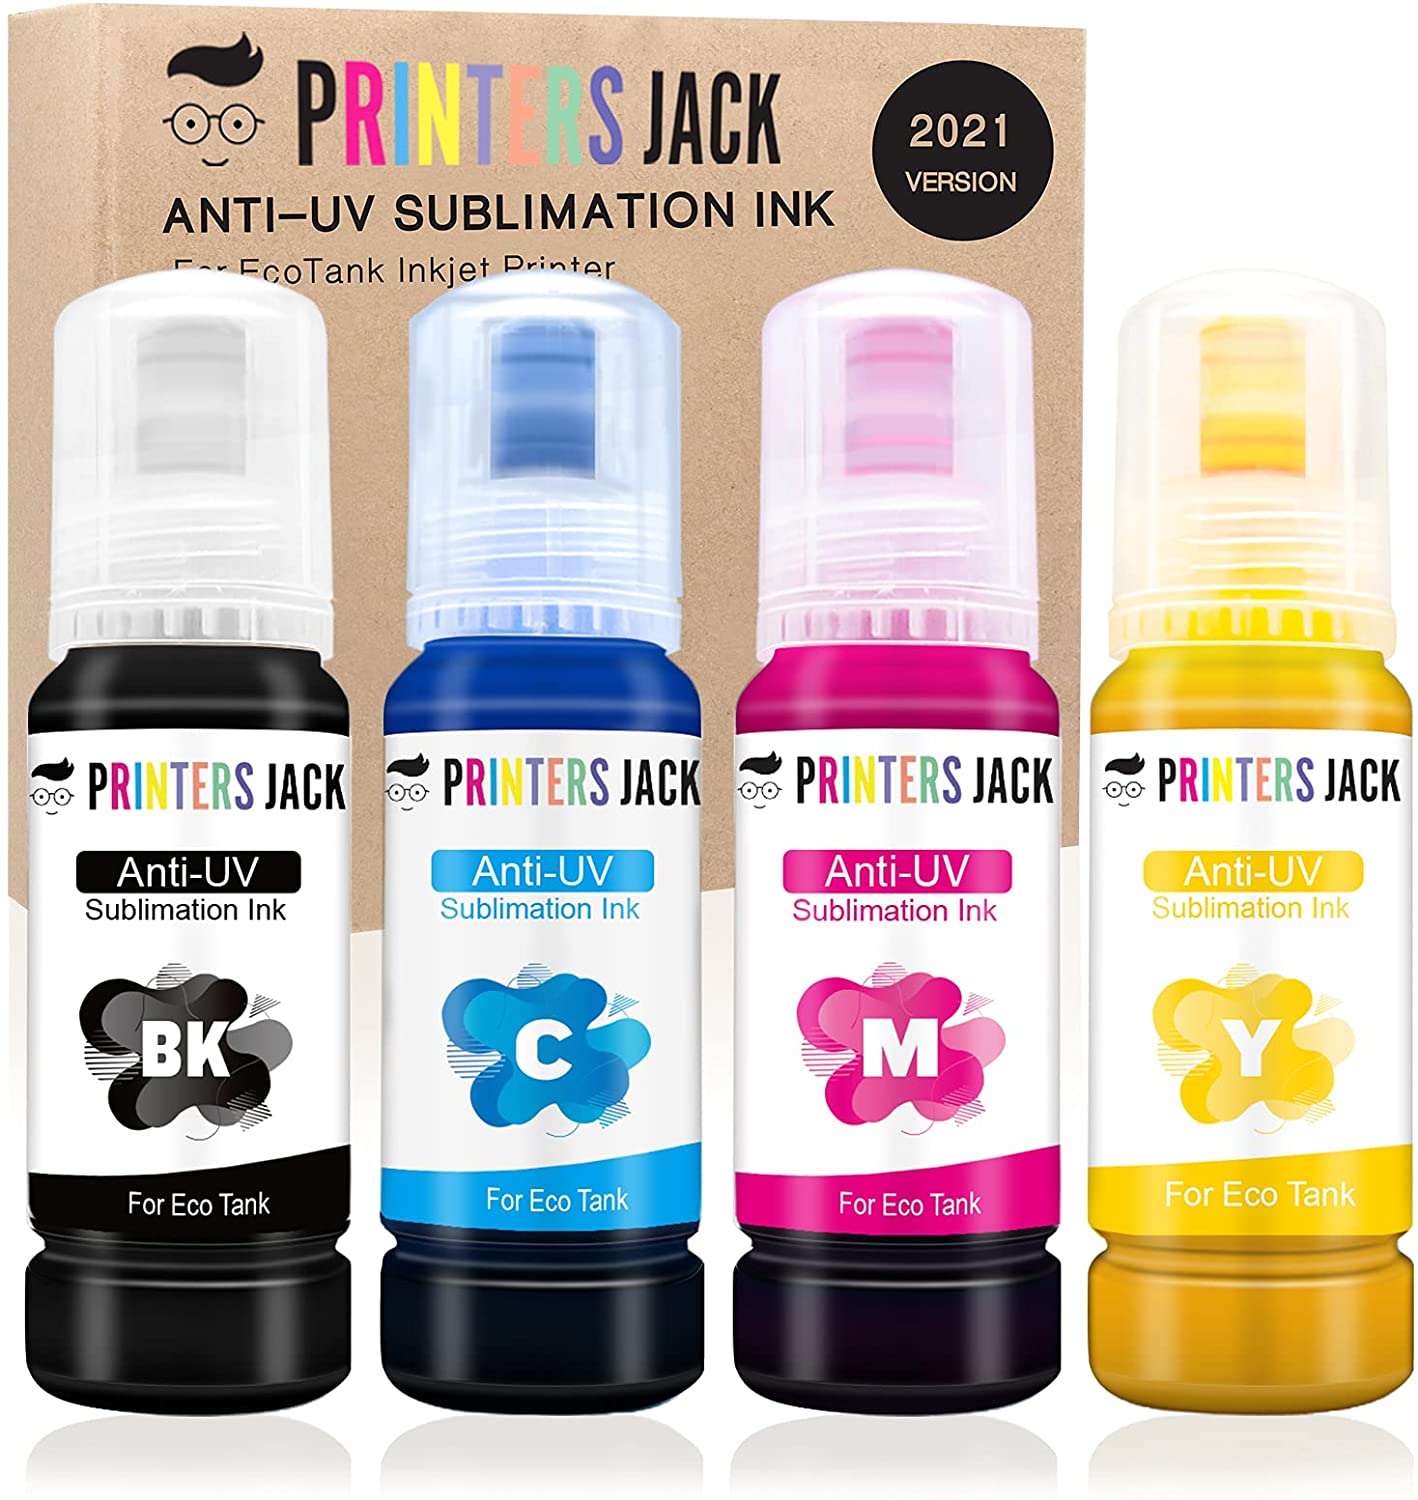 Printers Jack丨Your color management expert – printers-jack